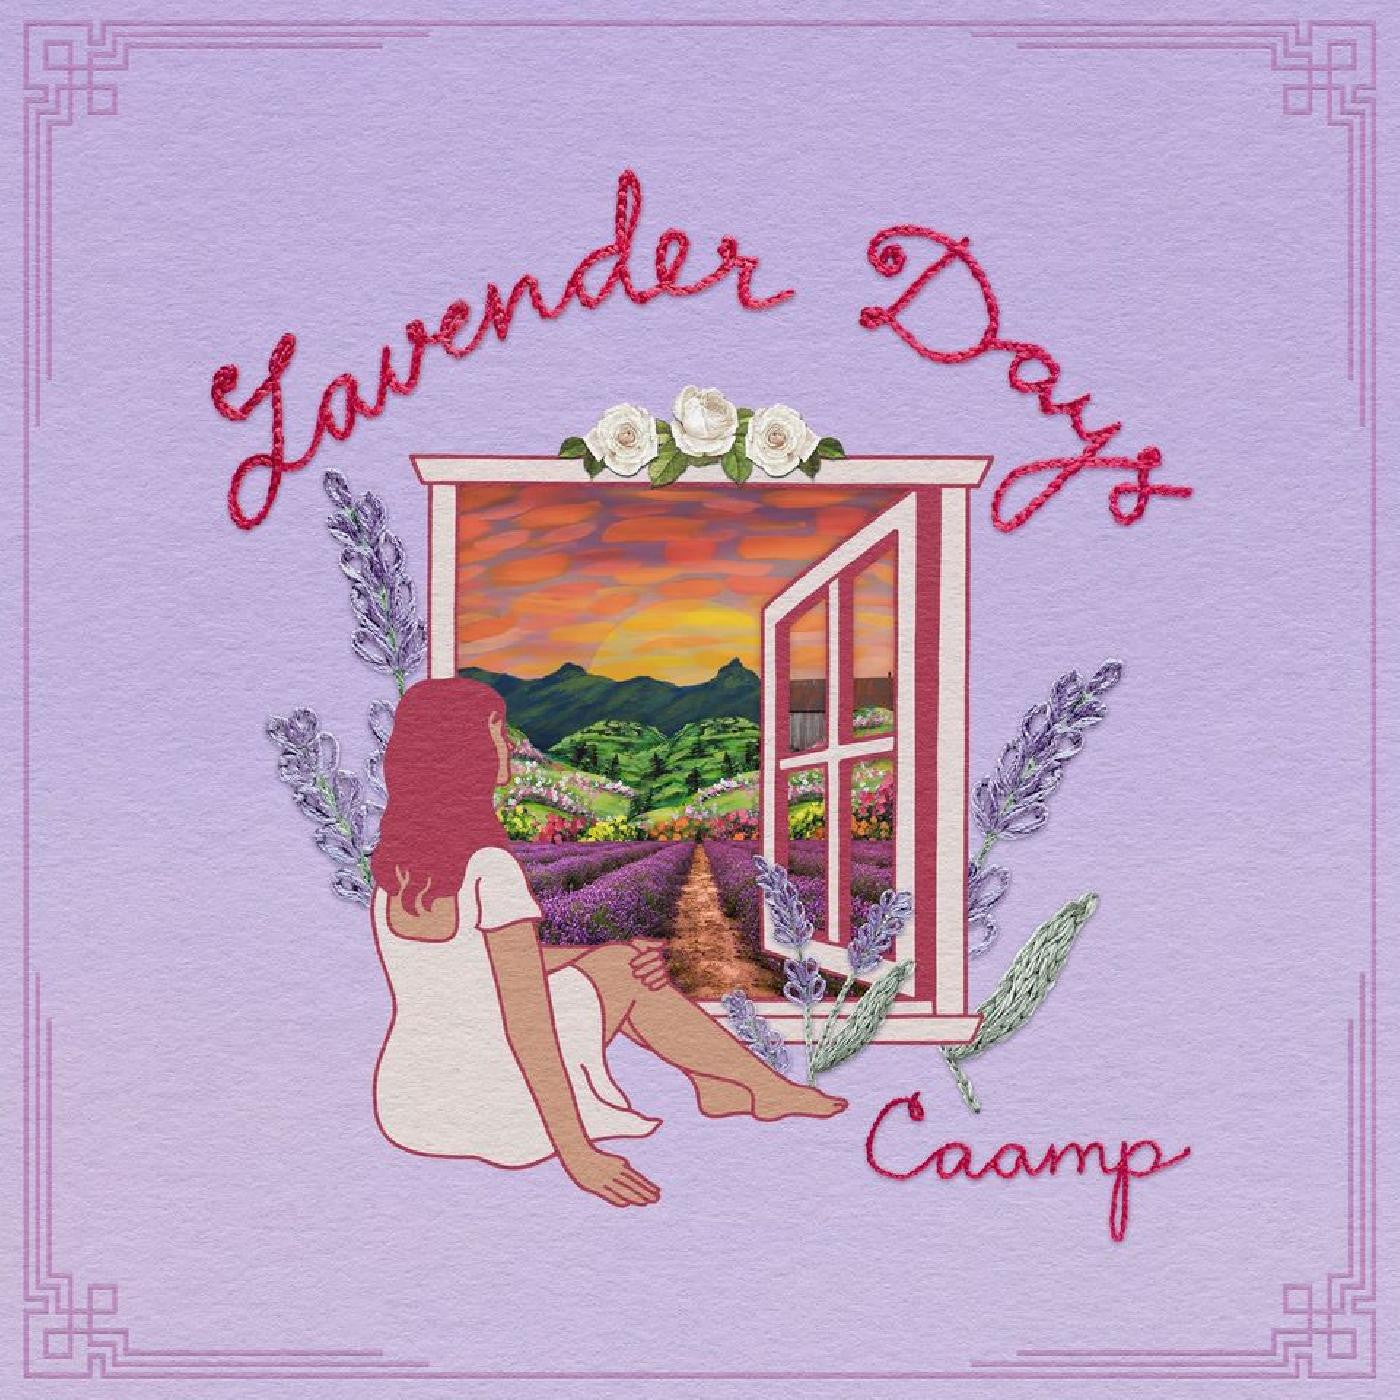 Caamp - Lavender Days (Vinyl LP)